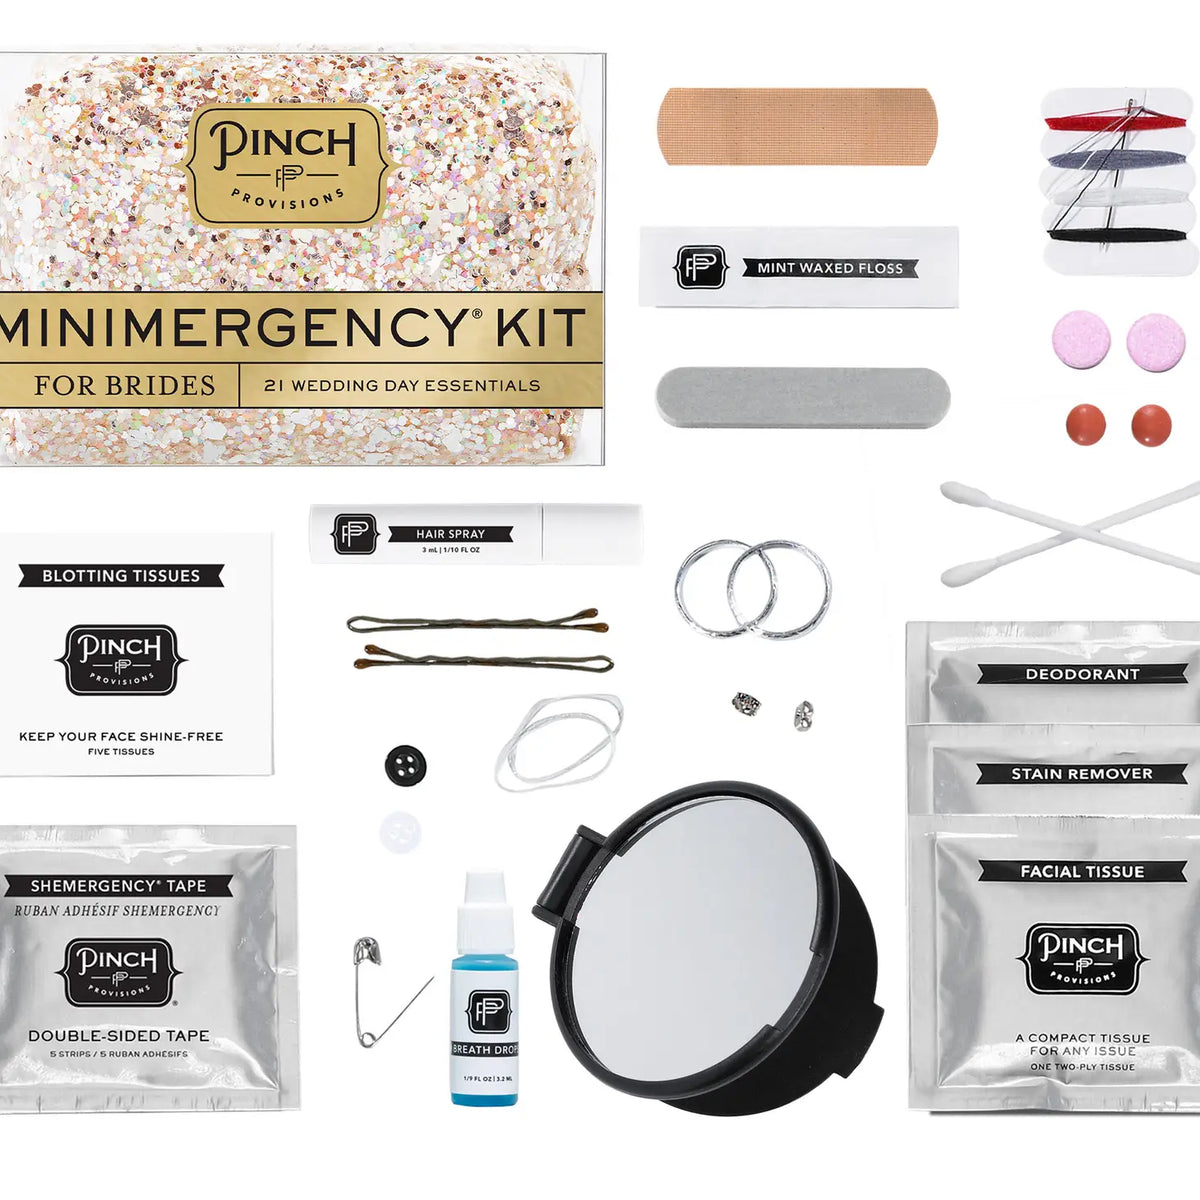 Minimergency Kit for Brides